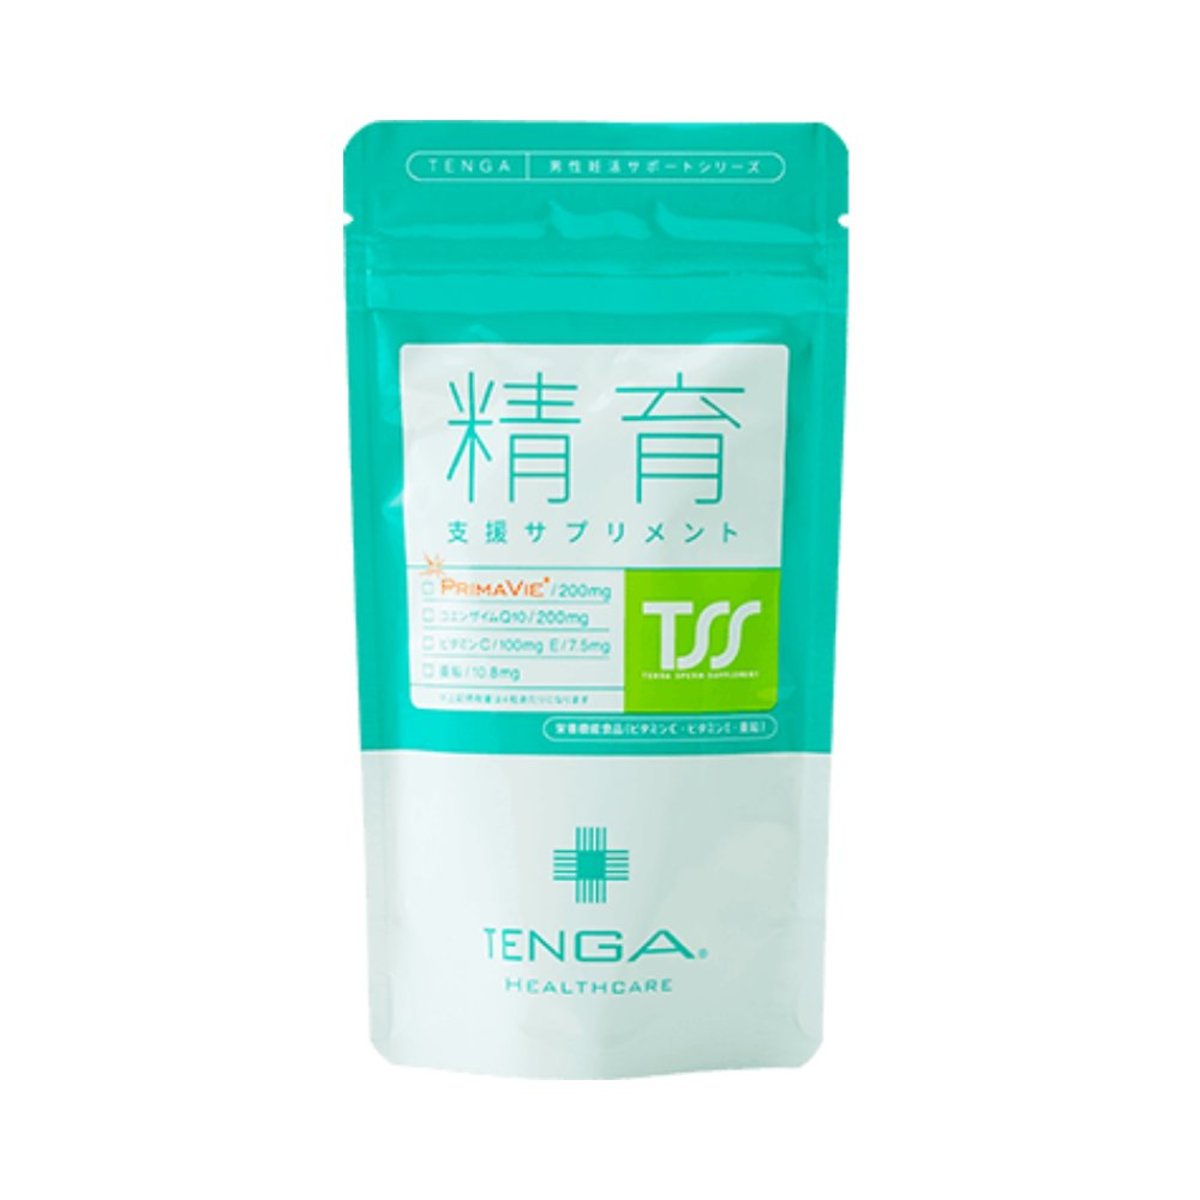 TENGA 精育支援補充品 - tengacharge